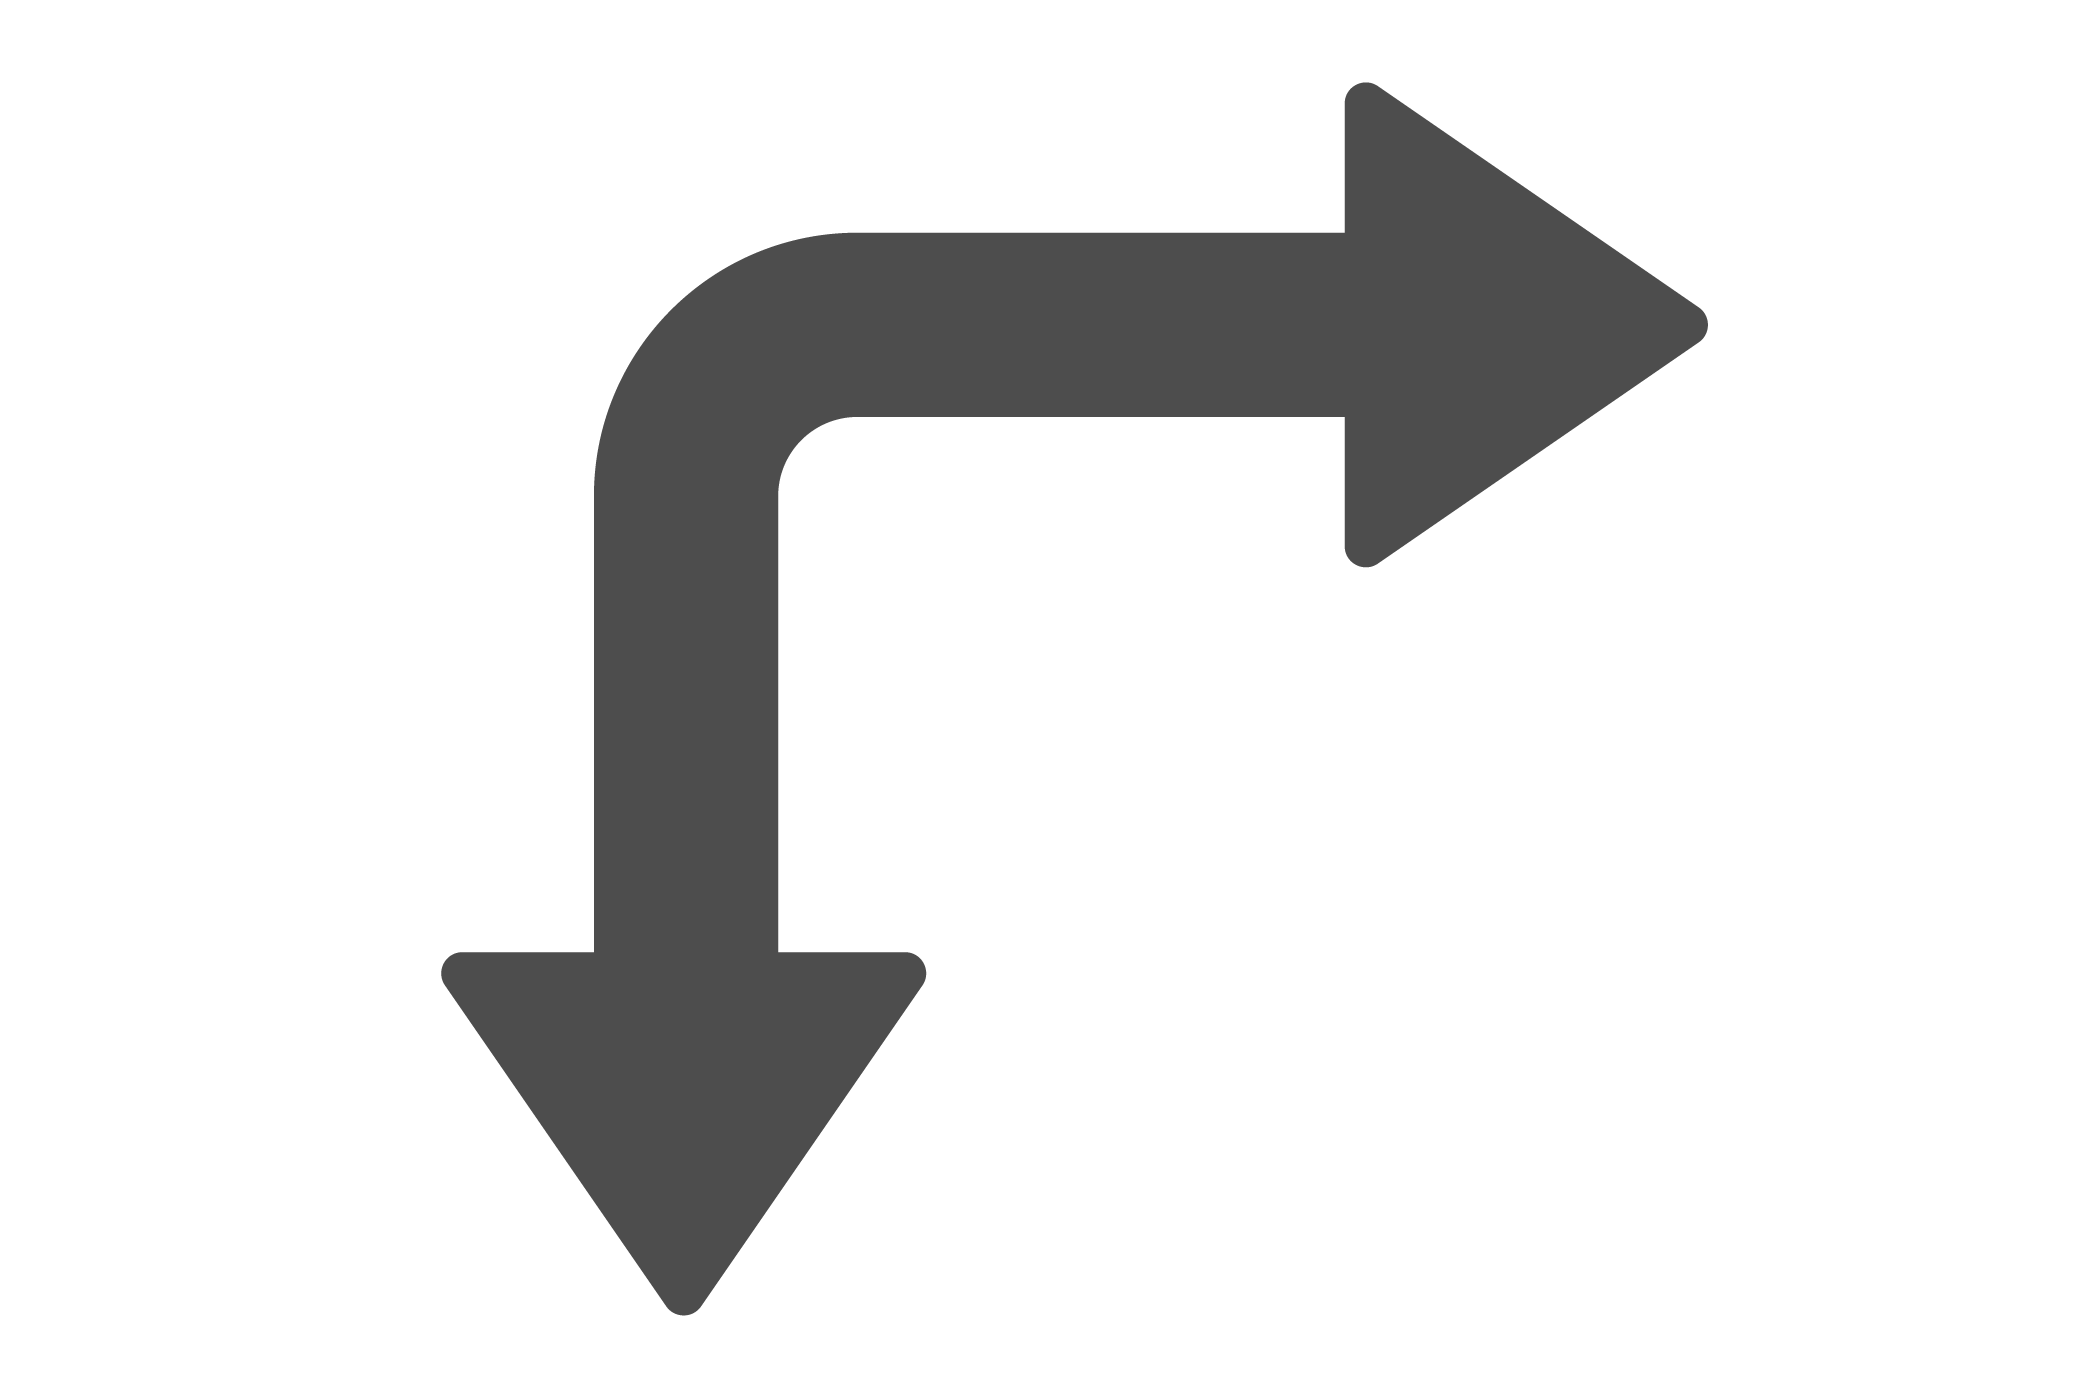 Contour / Straight / One / Simple / Line art / Connection arrow / Direction / Forward / Clip art / Vector / Beju curve / ai file / Edit